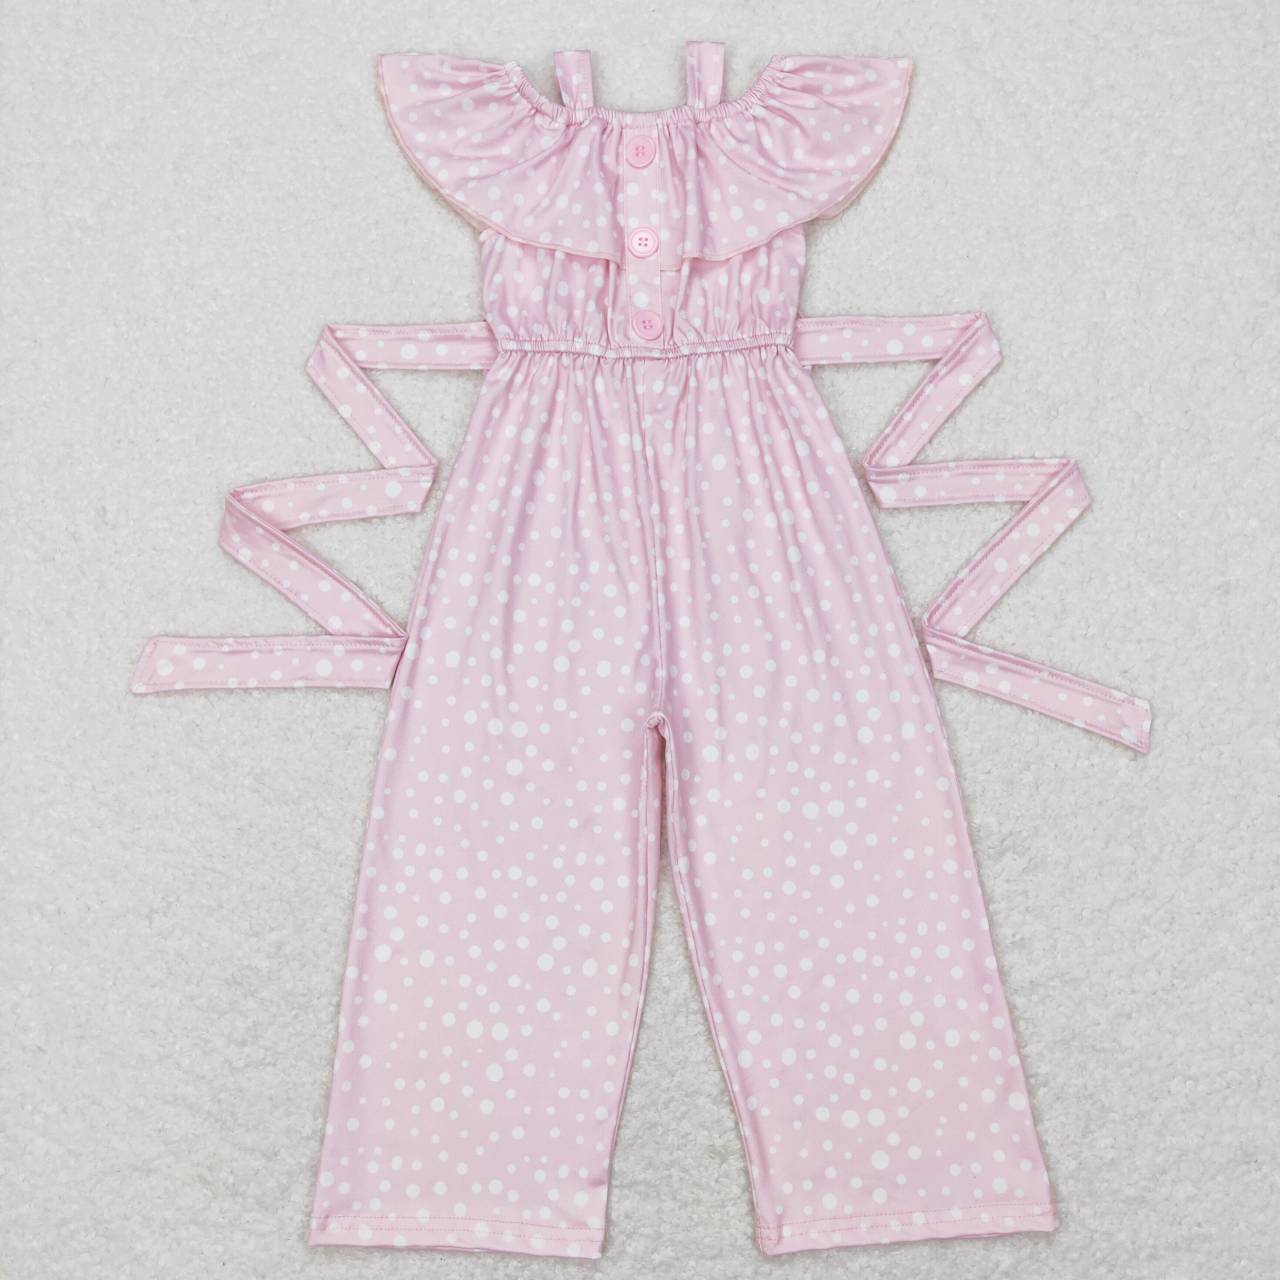 SR0420 Polka dot bow tie lace pink jumpsuit